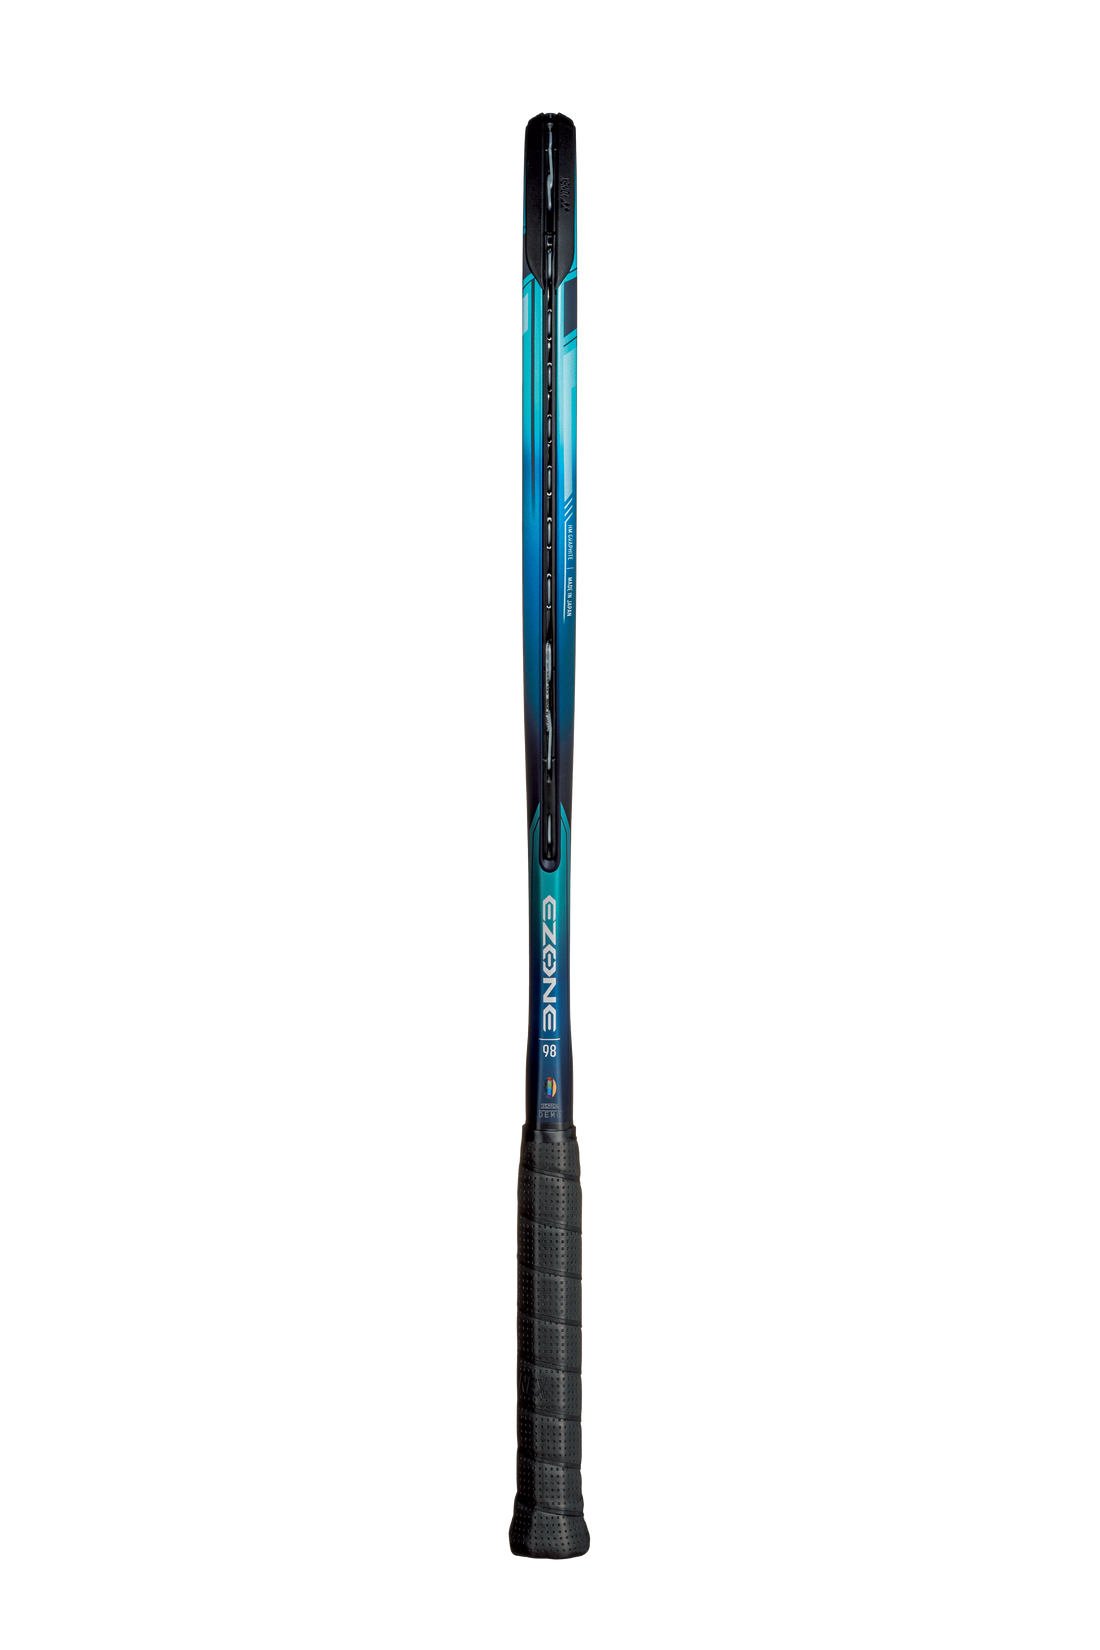 Yonex 2022 EZONE 98 305G Unstrung Tennis Racket [Sky Blue]